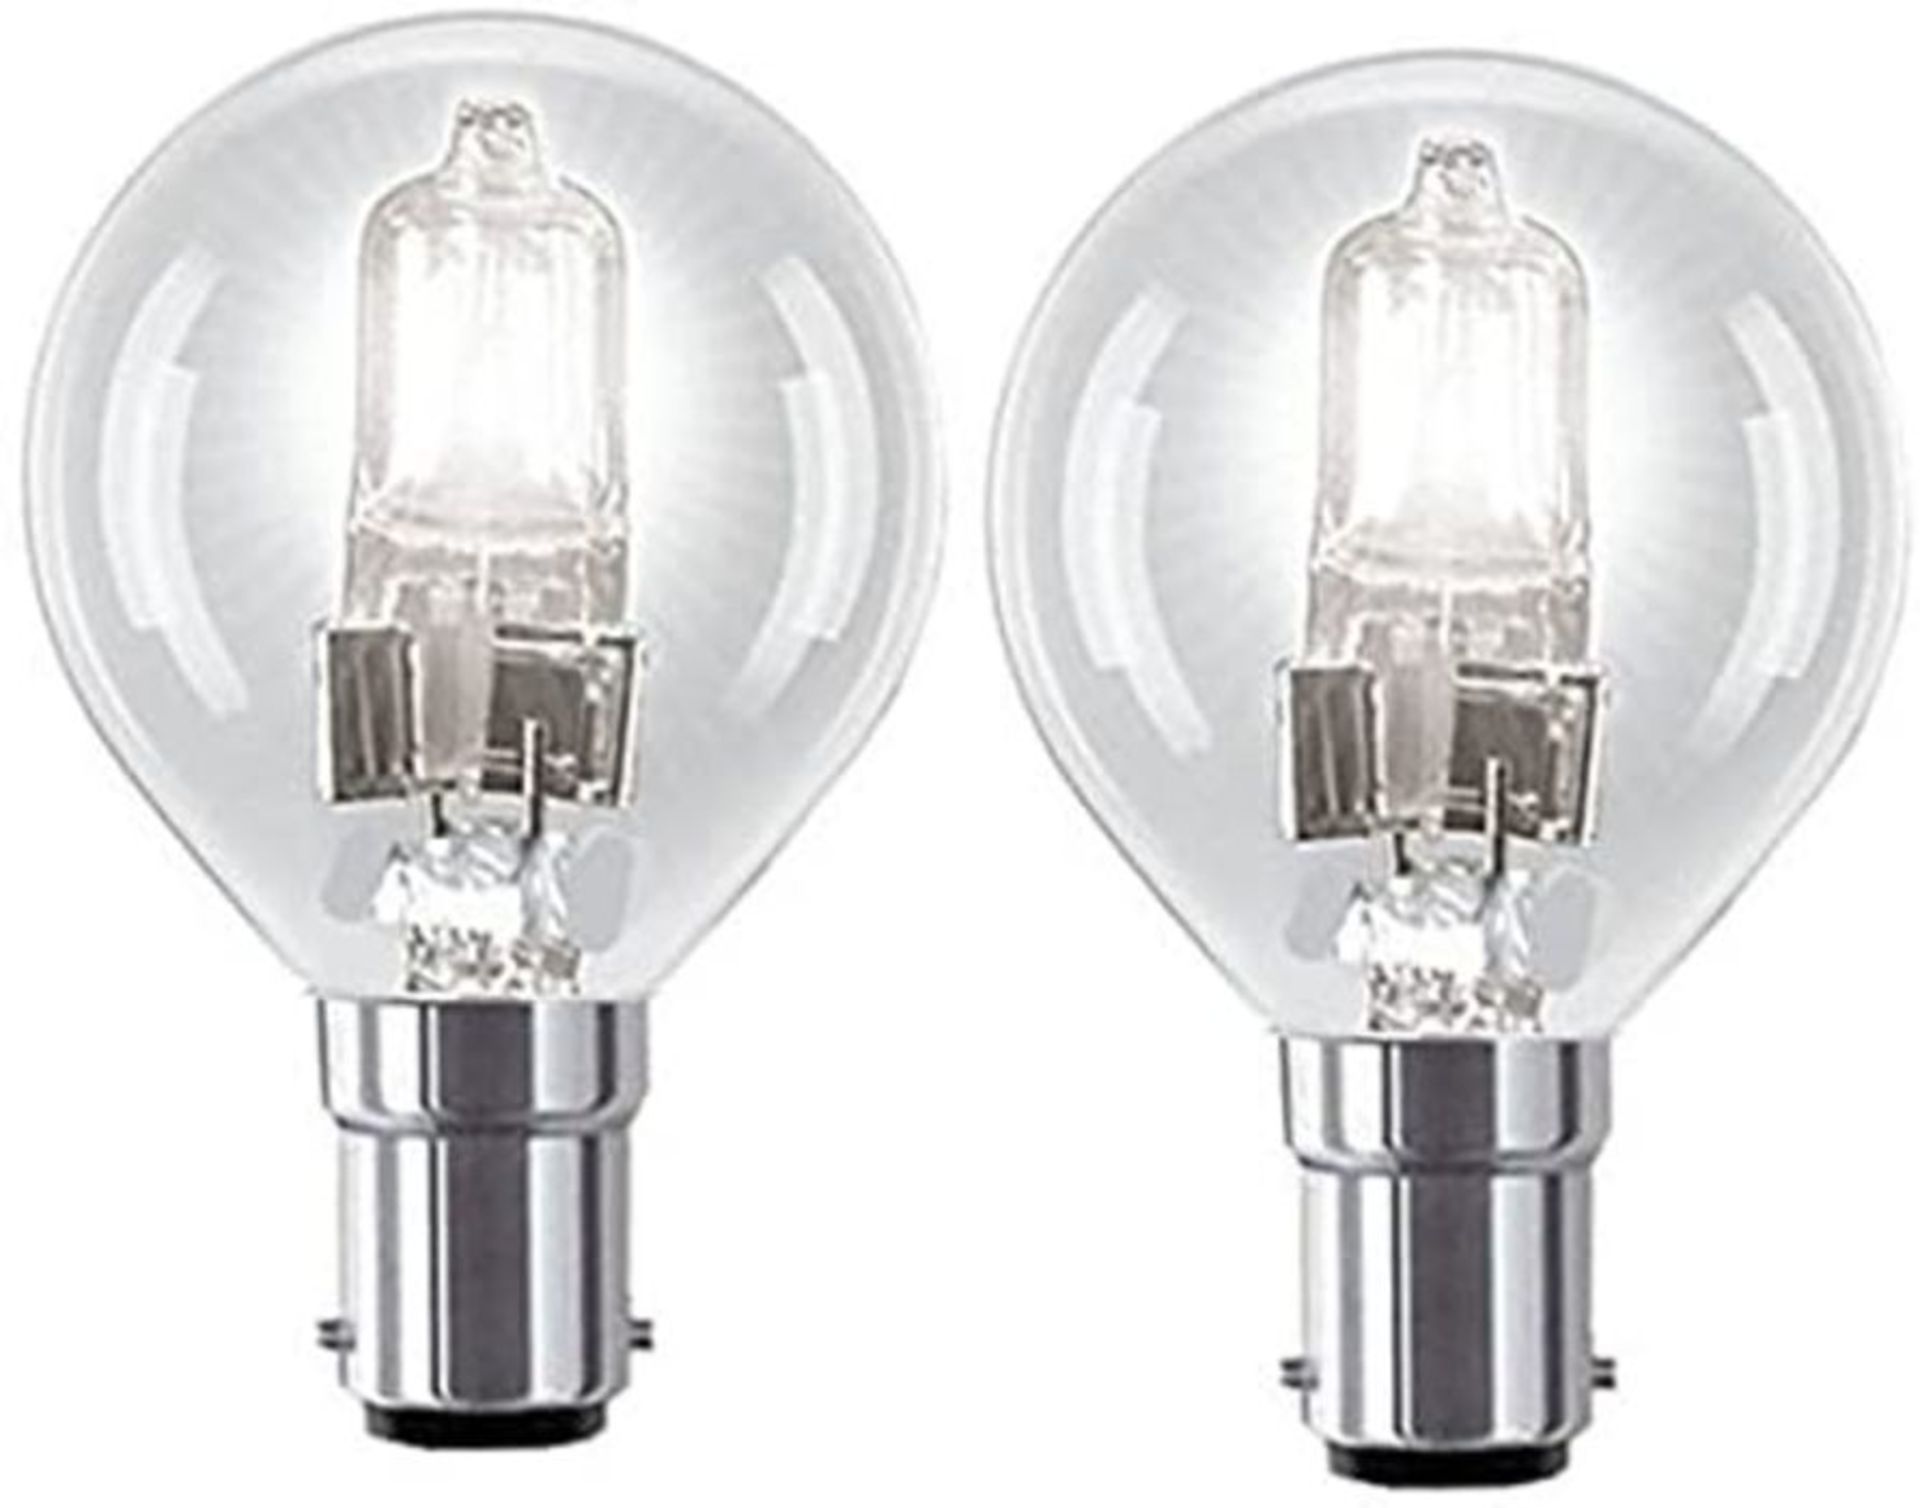 2 x Halogen Golf Ball 18W=23W Light Bulbs SBC B15 Small Bayonet Cap Round Mini Globes Dimmable Lamps